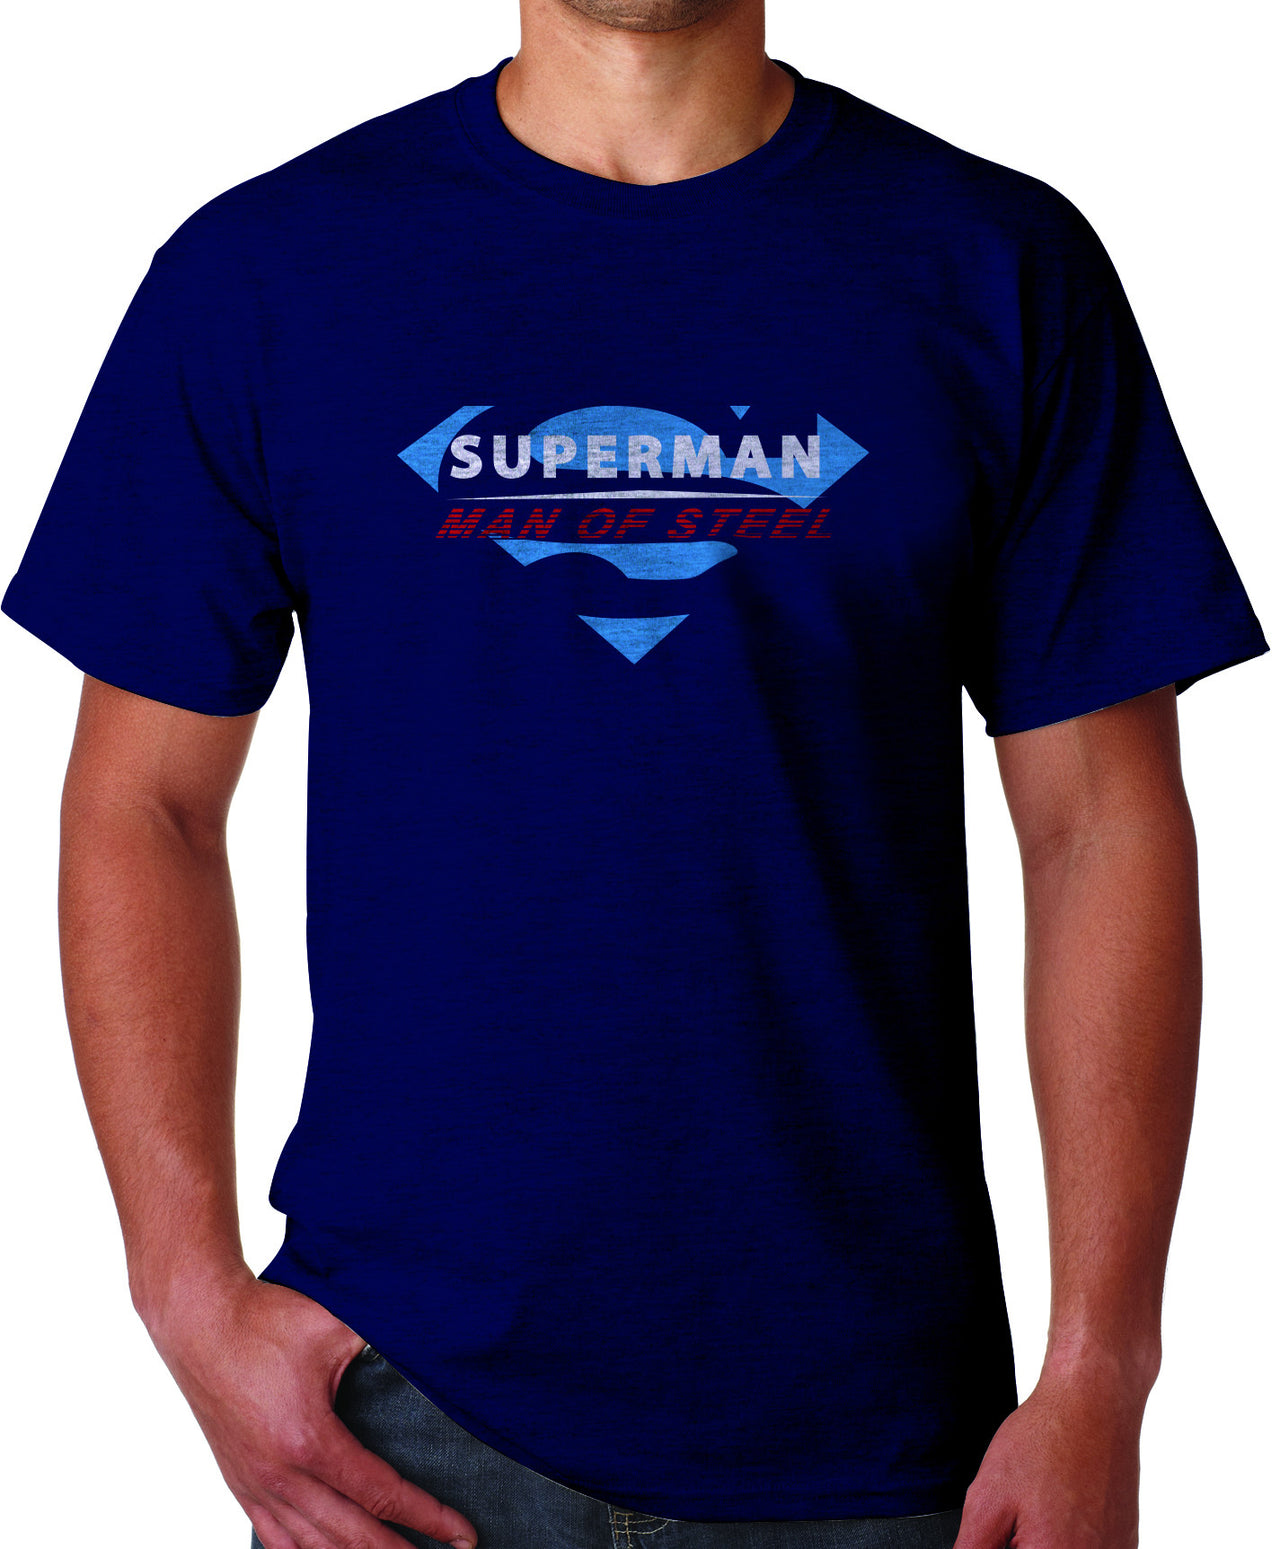 Superman Man of Steel Logo on Navy Colored tshirt for Men - TshirtNow.net - 1